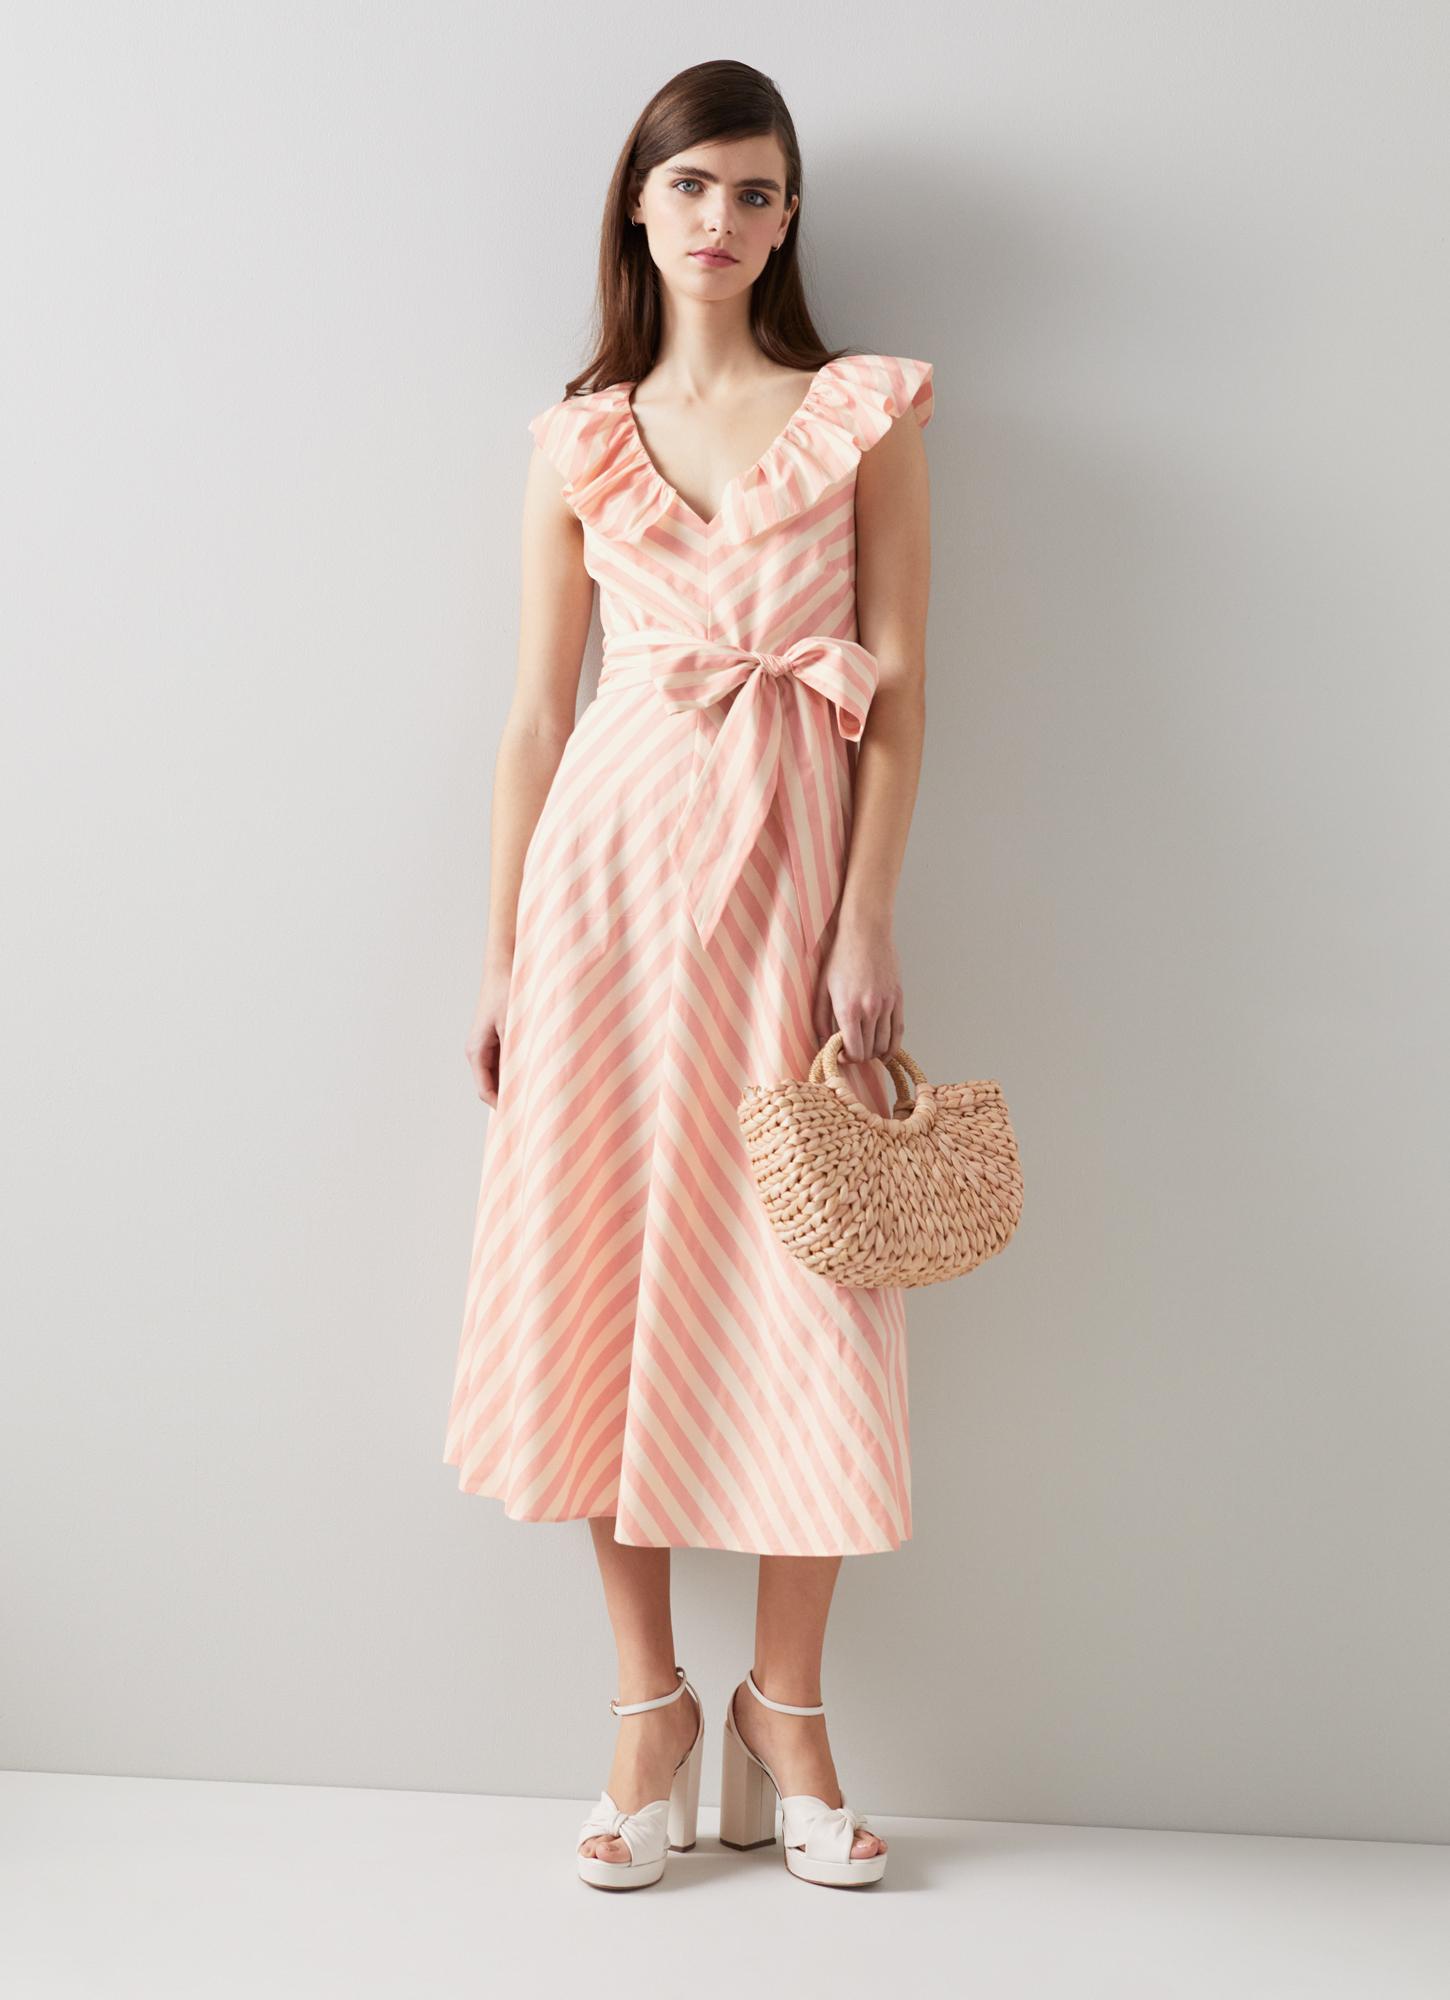 Shenyu Pink and White Cotton Candy Stripe Dress Striped Dress, Striped Dress